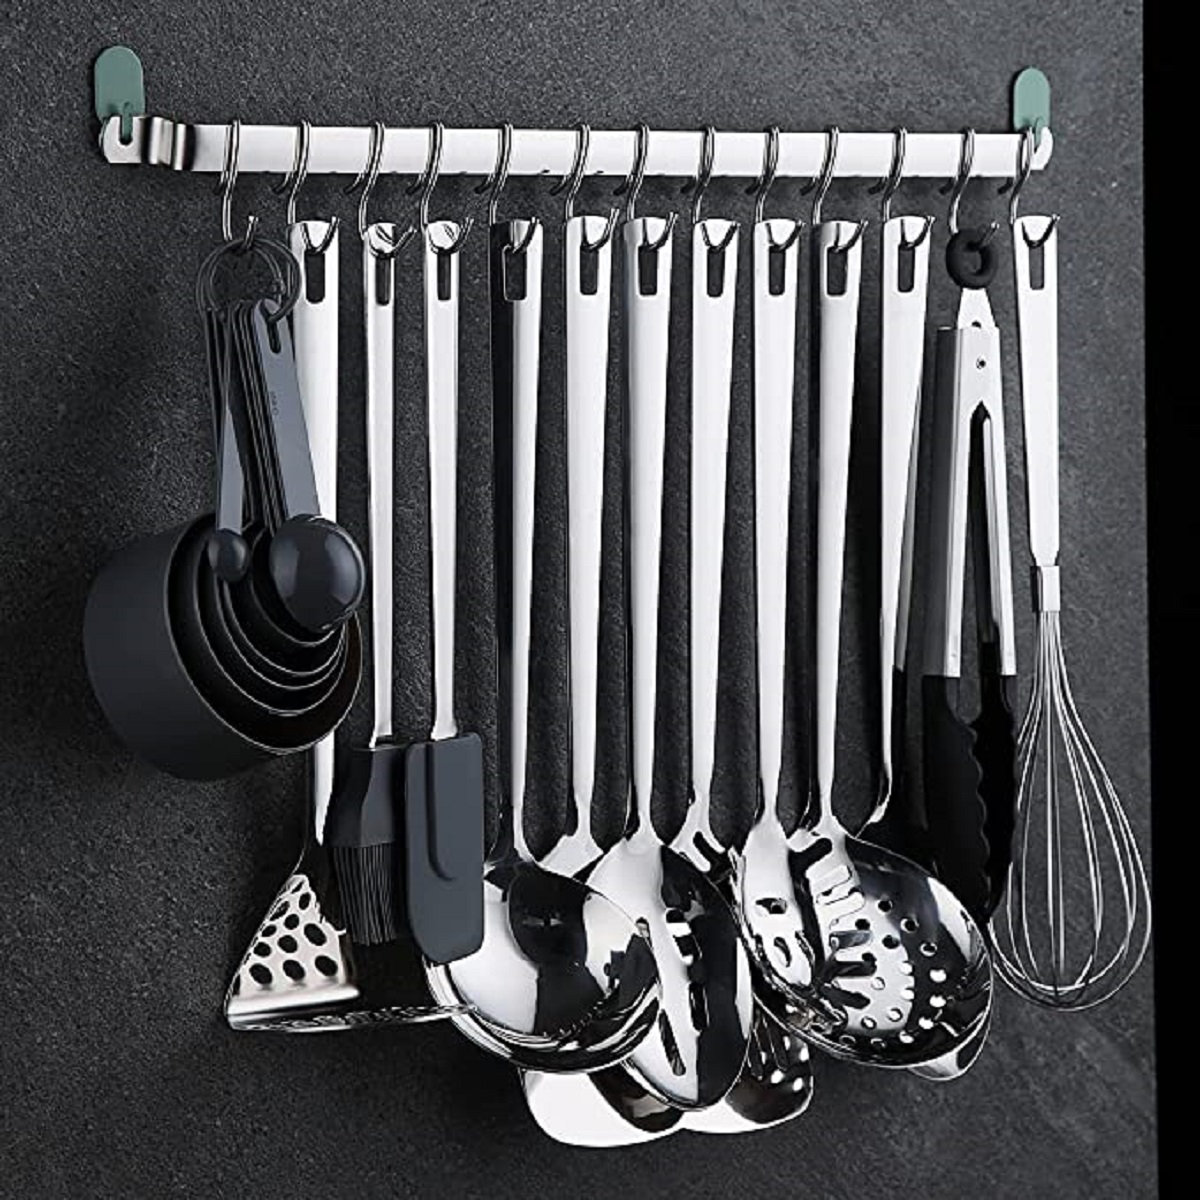 37 Pieces Kitchen Utensils Set Kitchen Gadgets Tool Set With Utensils Racks 